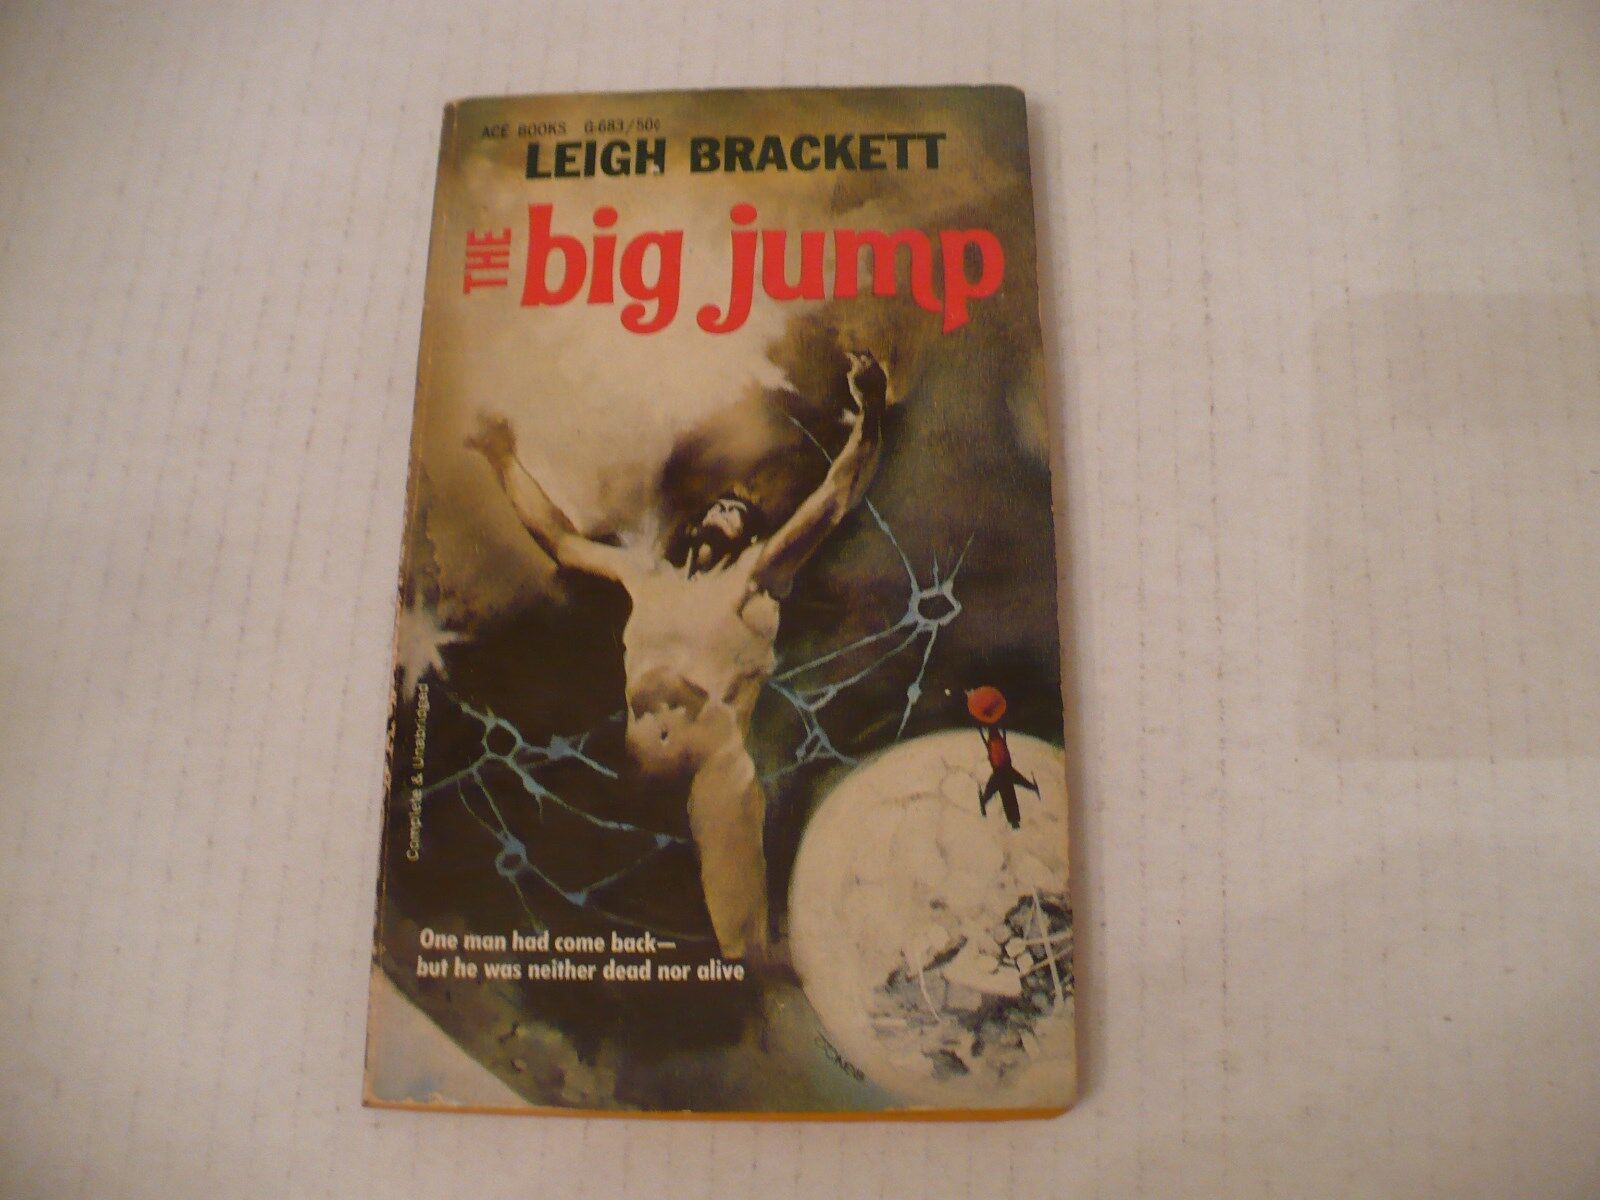 THE BIG JUMP BY LEIGH BRACKETT-ACE #G-683- 1960s PB-JEFF JONES CVR